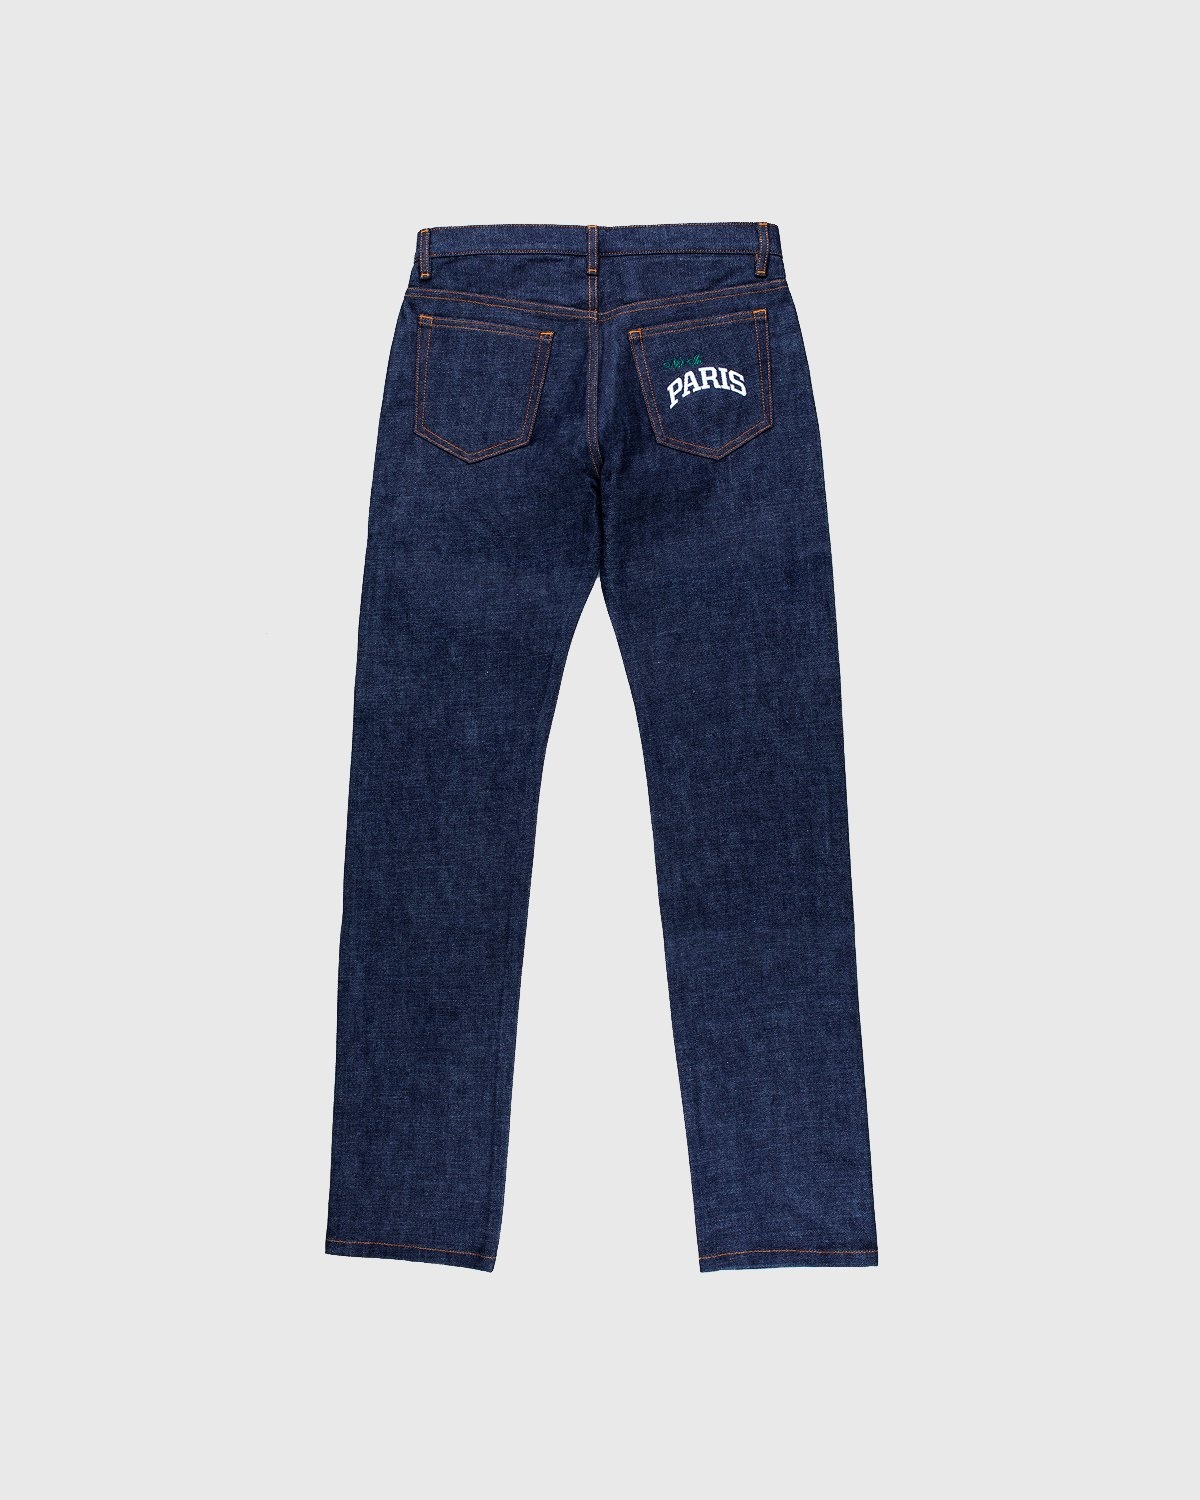 A.P.C. x Highsnobiety – Denim Jeans Blue - Pants - Blue - Image 2